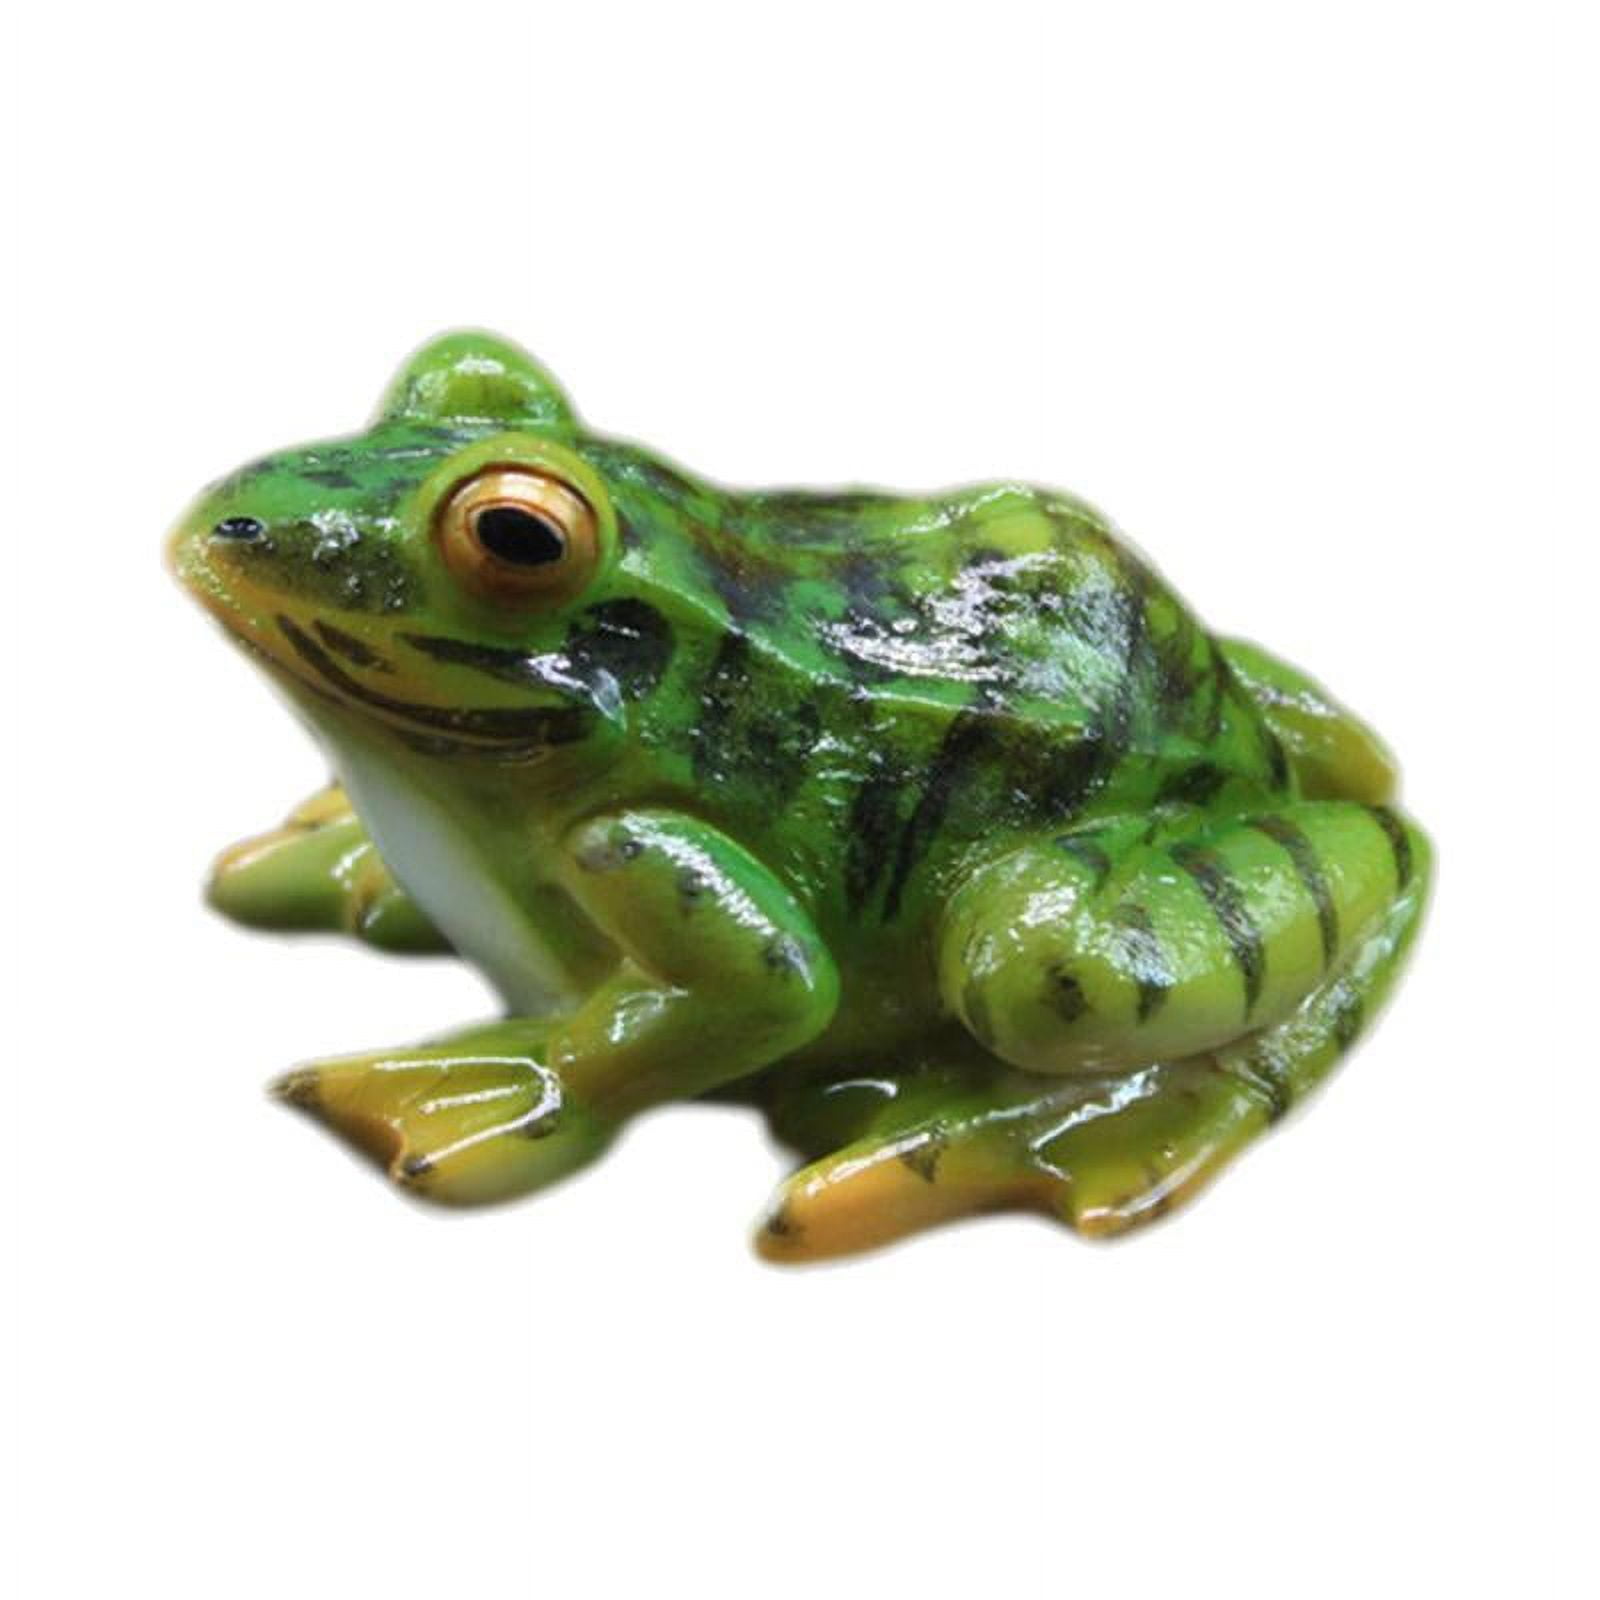 11 Frog Sitting In A Sukhasana Yoga Position Garden Statue